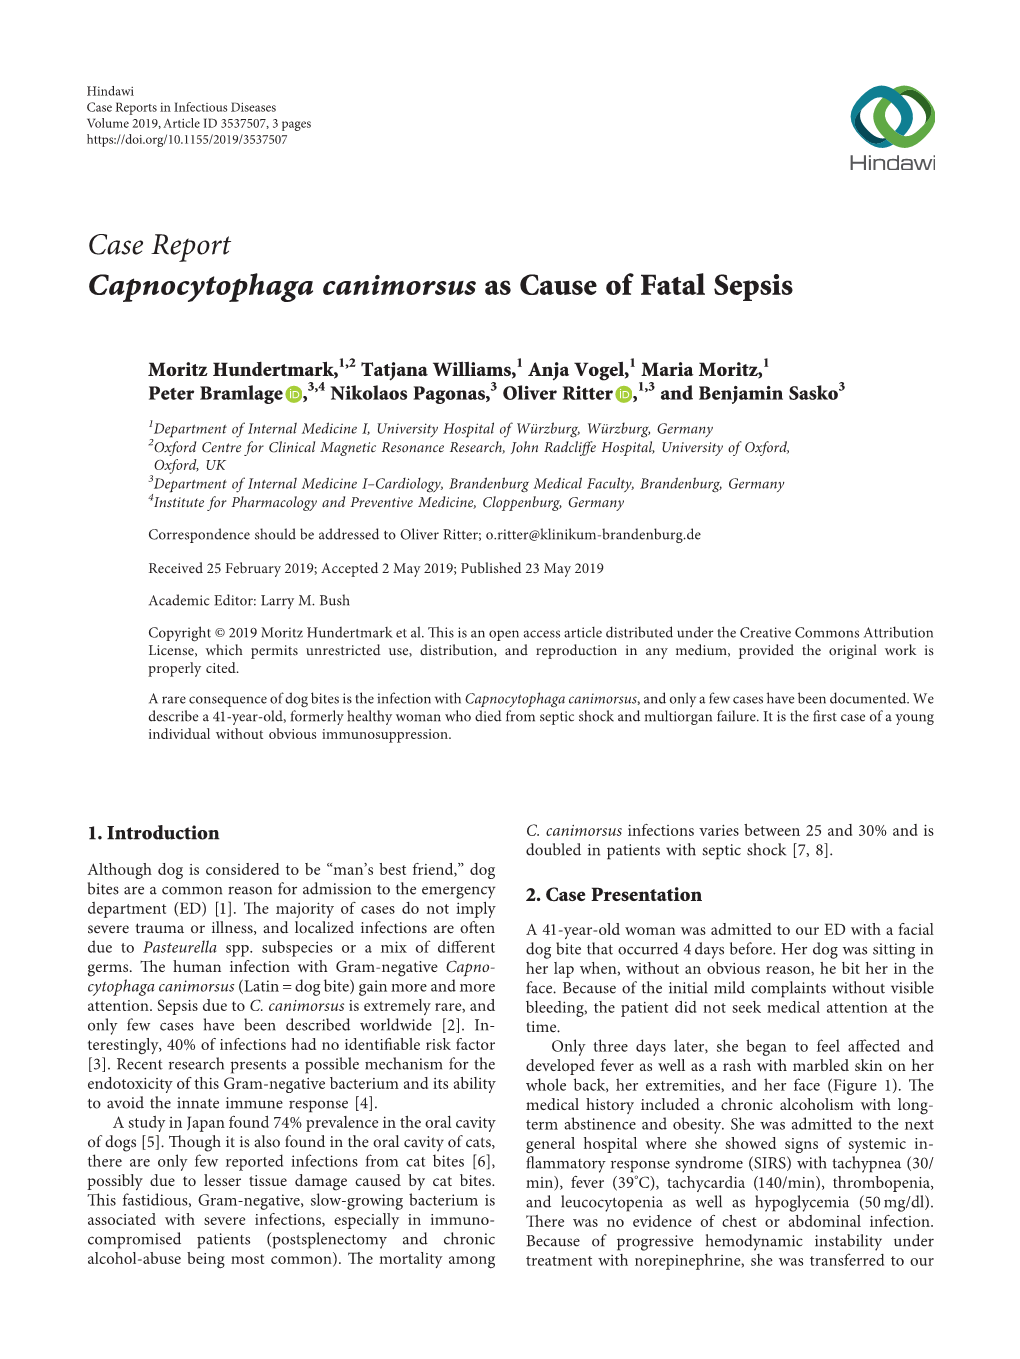 Case Report Capnocytophaga Canimorsus As Cause of Fatal Sepsis